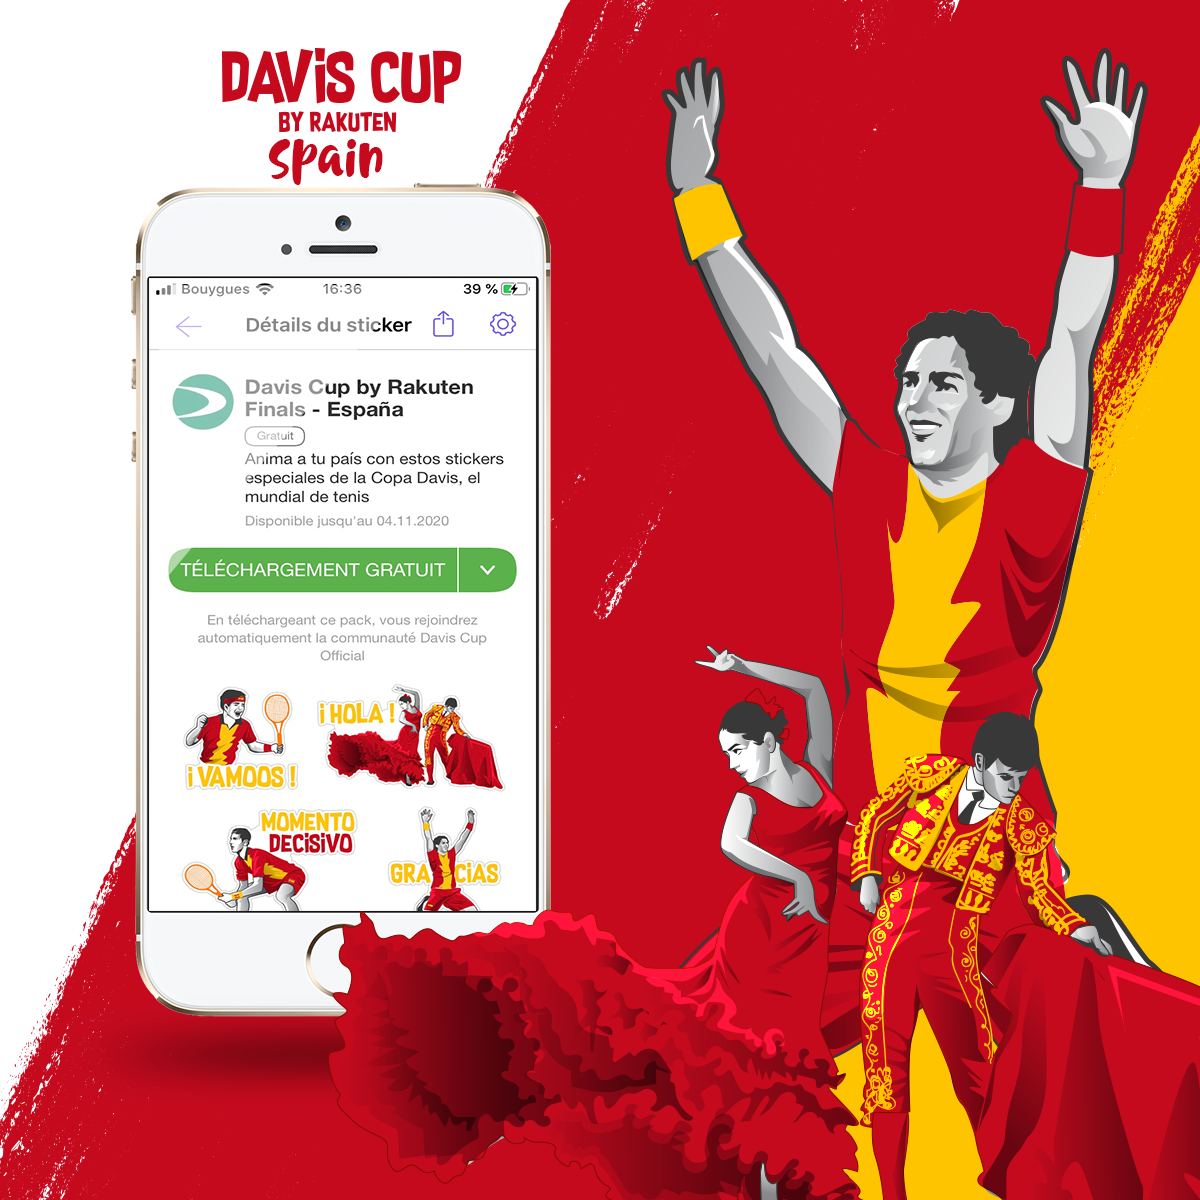 Davis Cup By Rakuten Finals - Spain